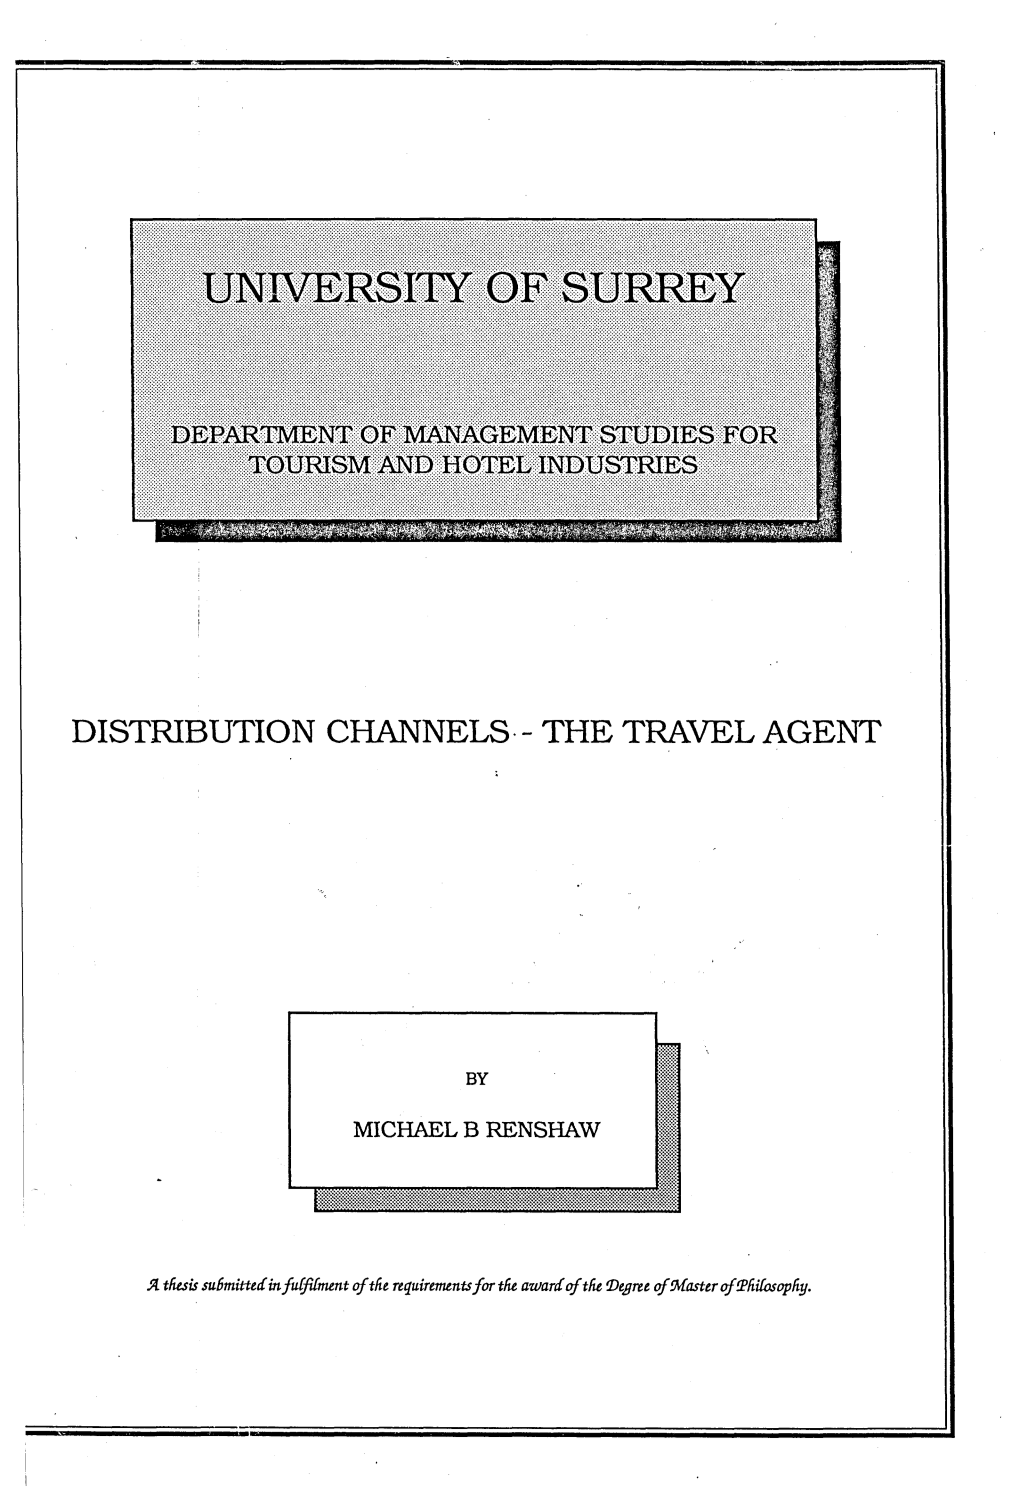 University of Surrey Department of Management Studies for Tourism